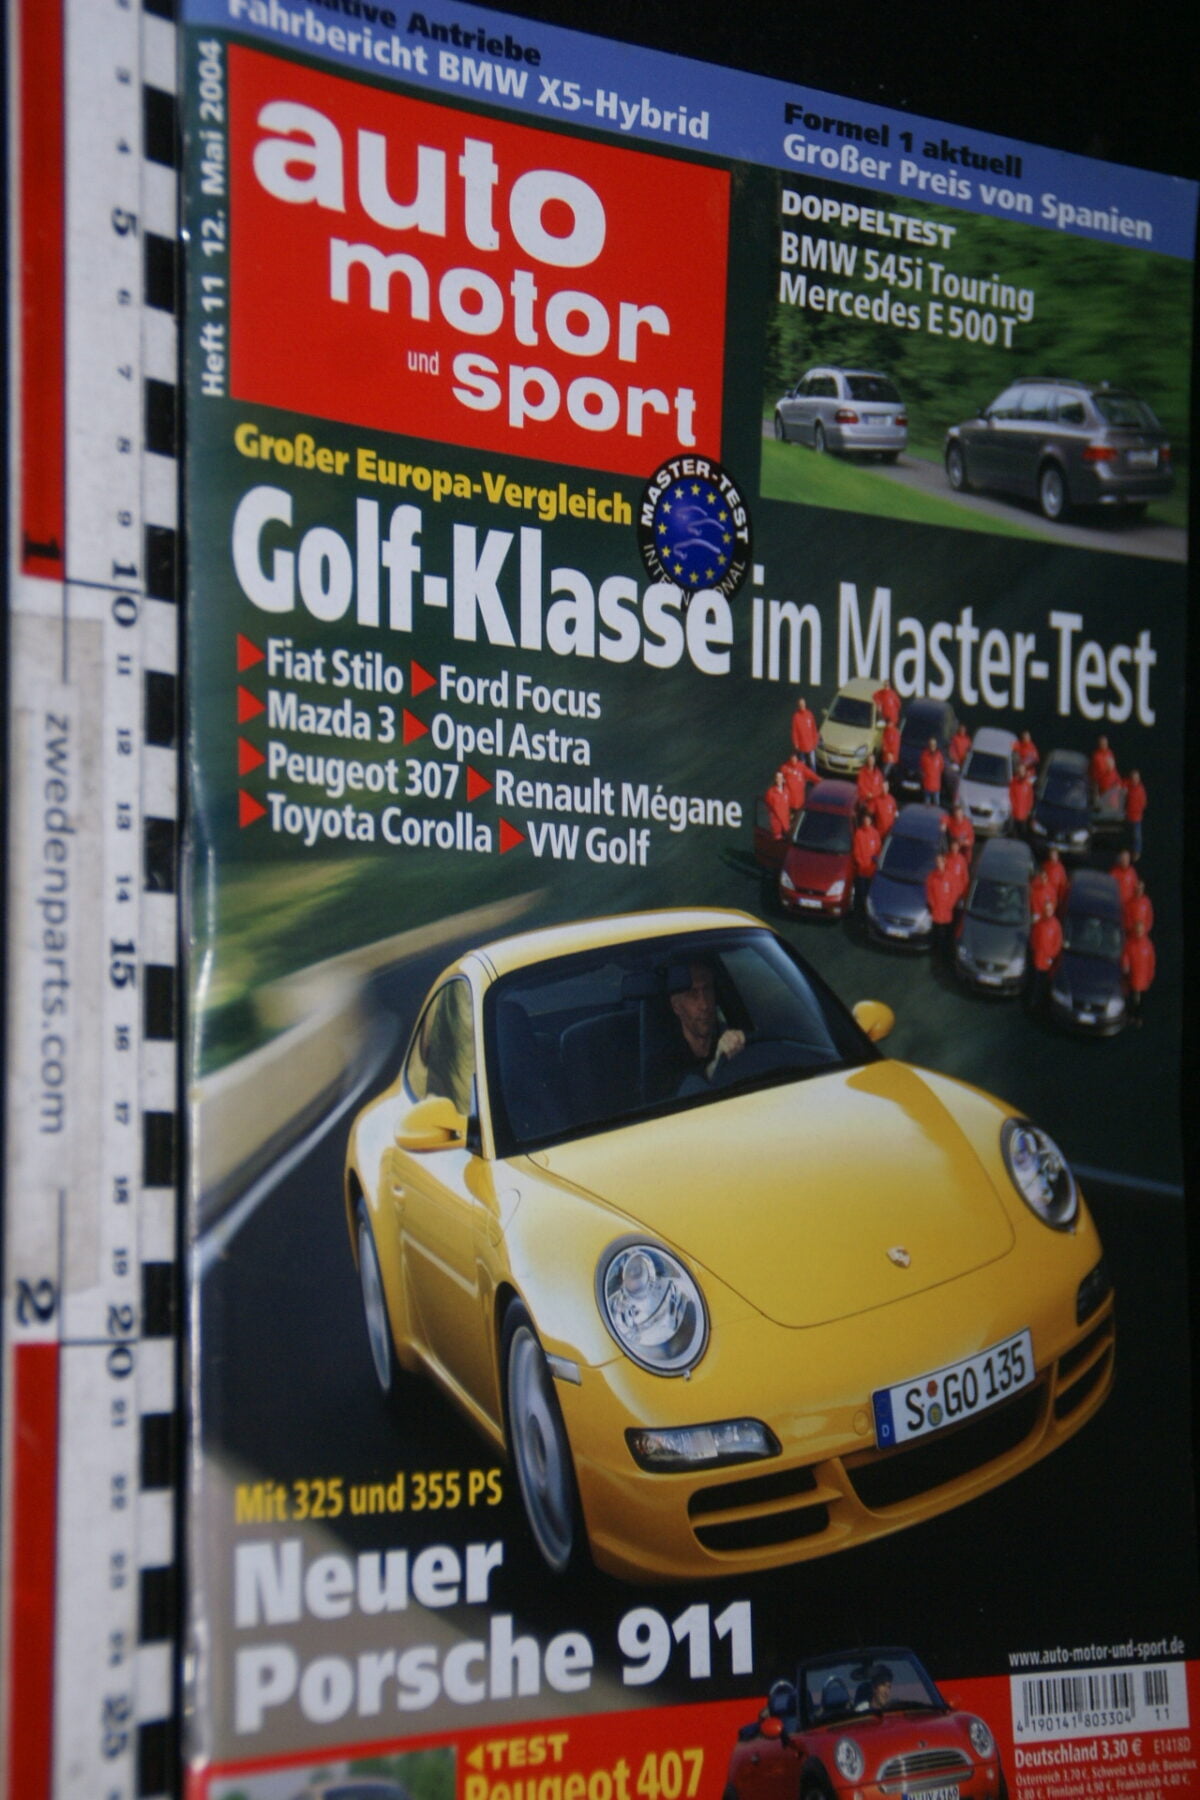 DSC09885 2004 mei tijdschrift Auto Motor en Sport, Deutsch  Porsche Abarth Mercedes E500T Mini cabrio-8fbb998a